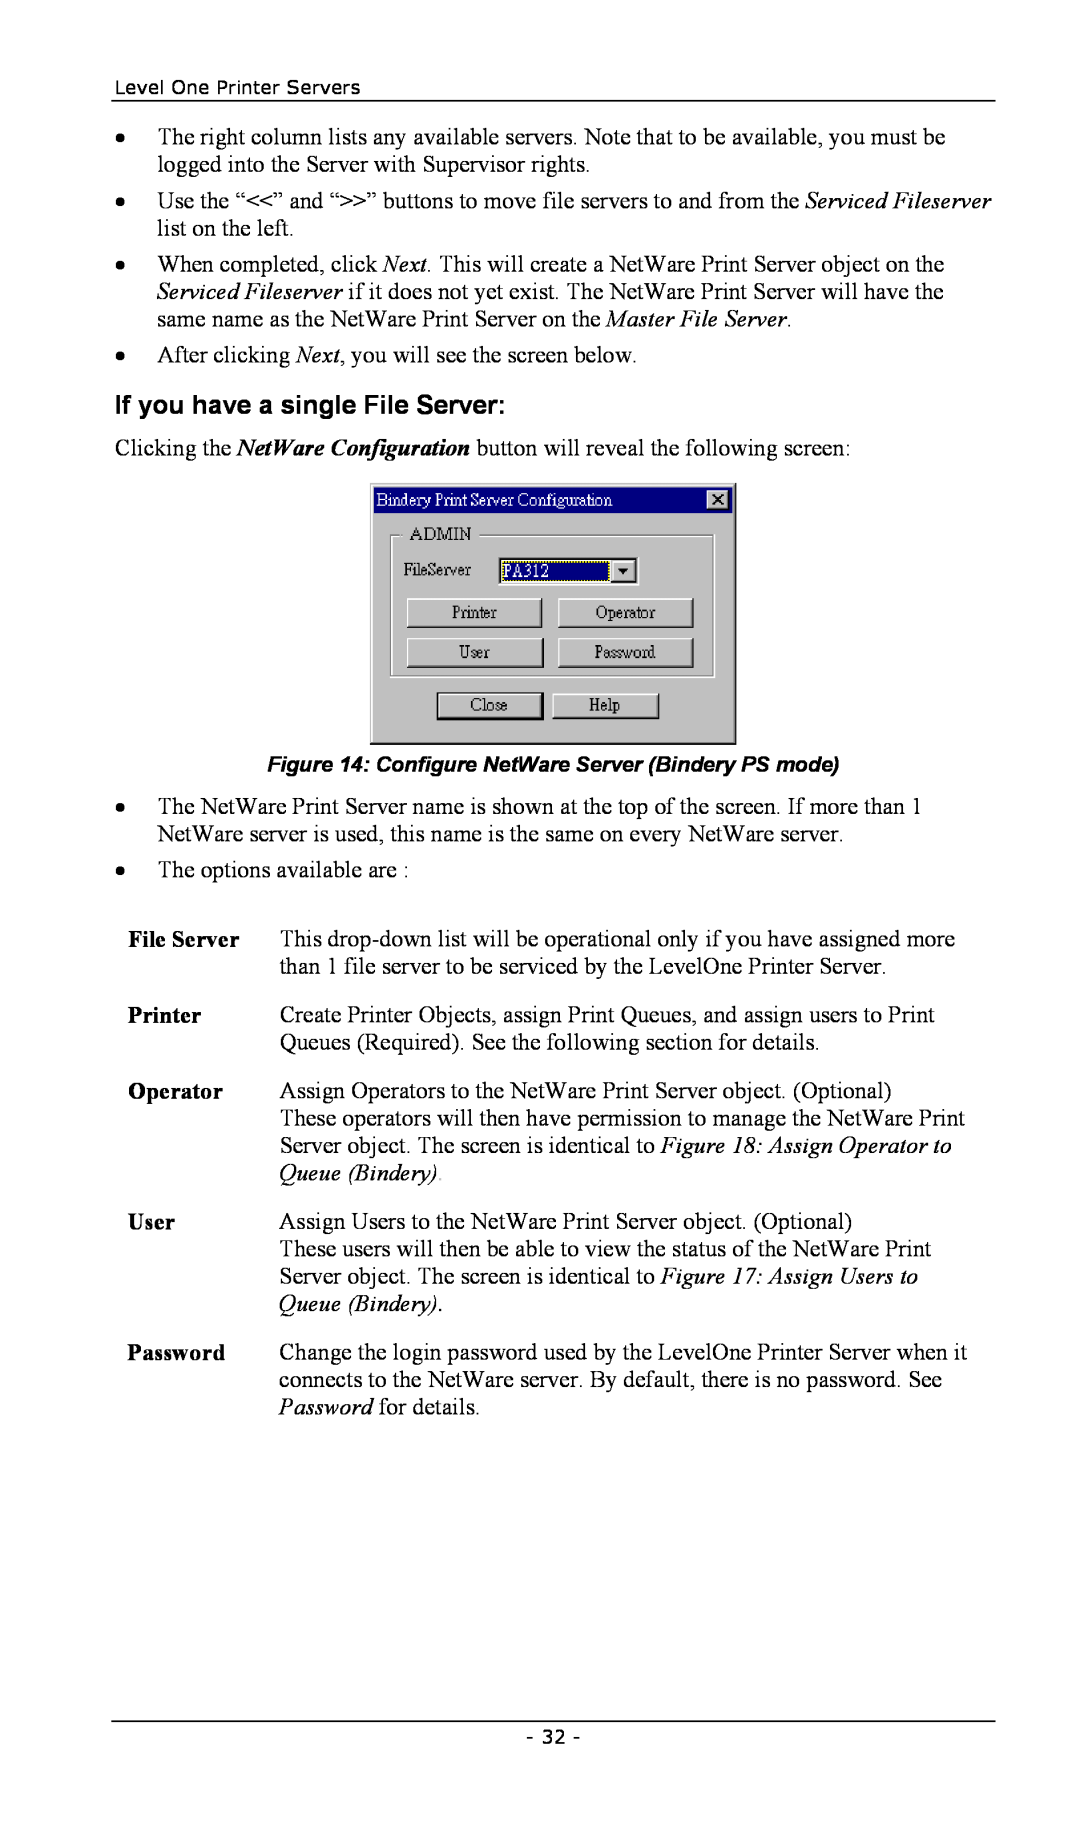 LevelOne EPS-3001TU, FPS-2003TXU manual If you have a single File Server, Queue Bindery, Printer, Operator, User, Password 